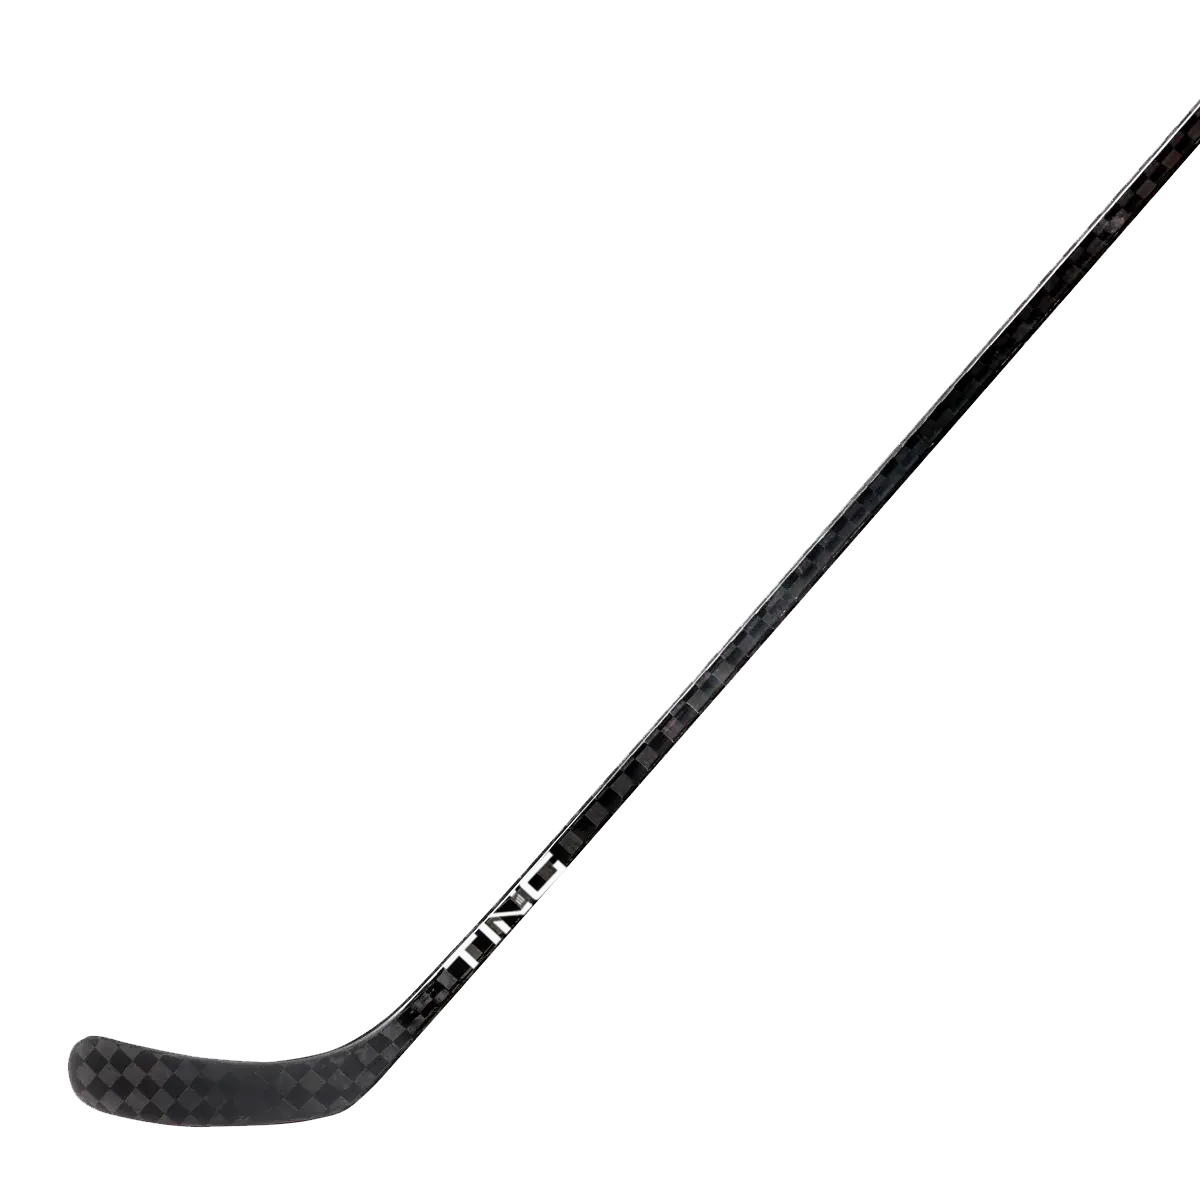 intermediate hockey stick product image